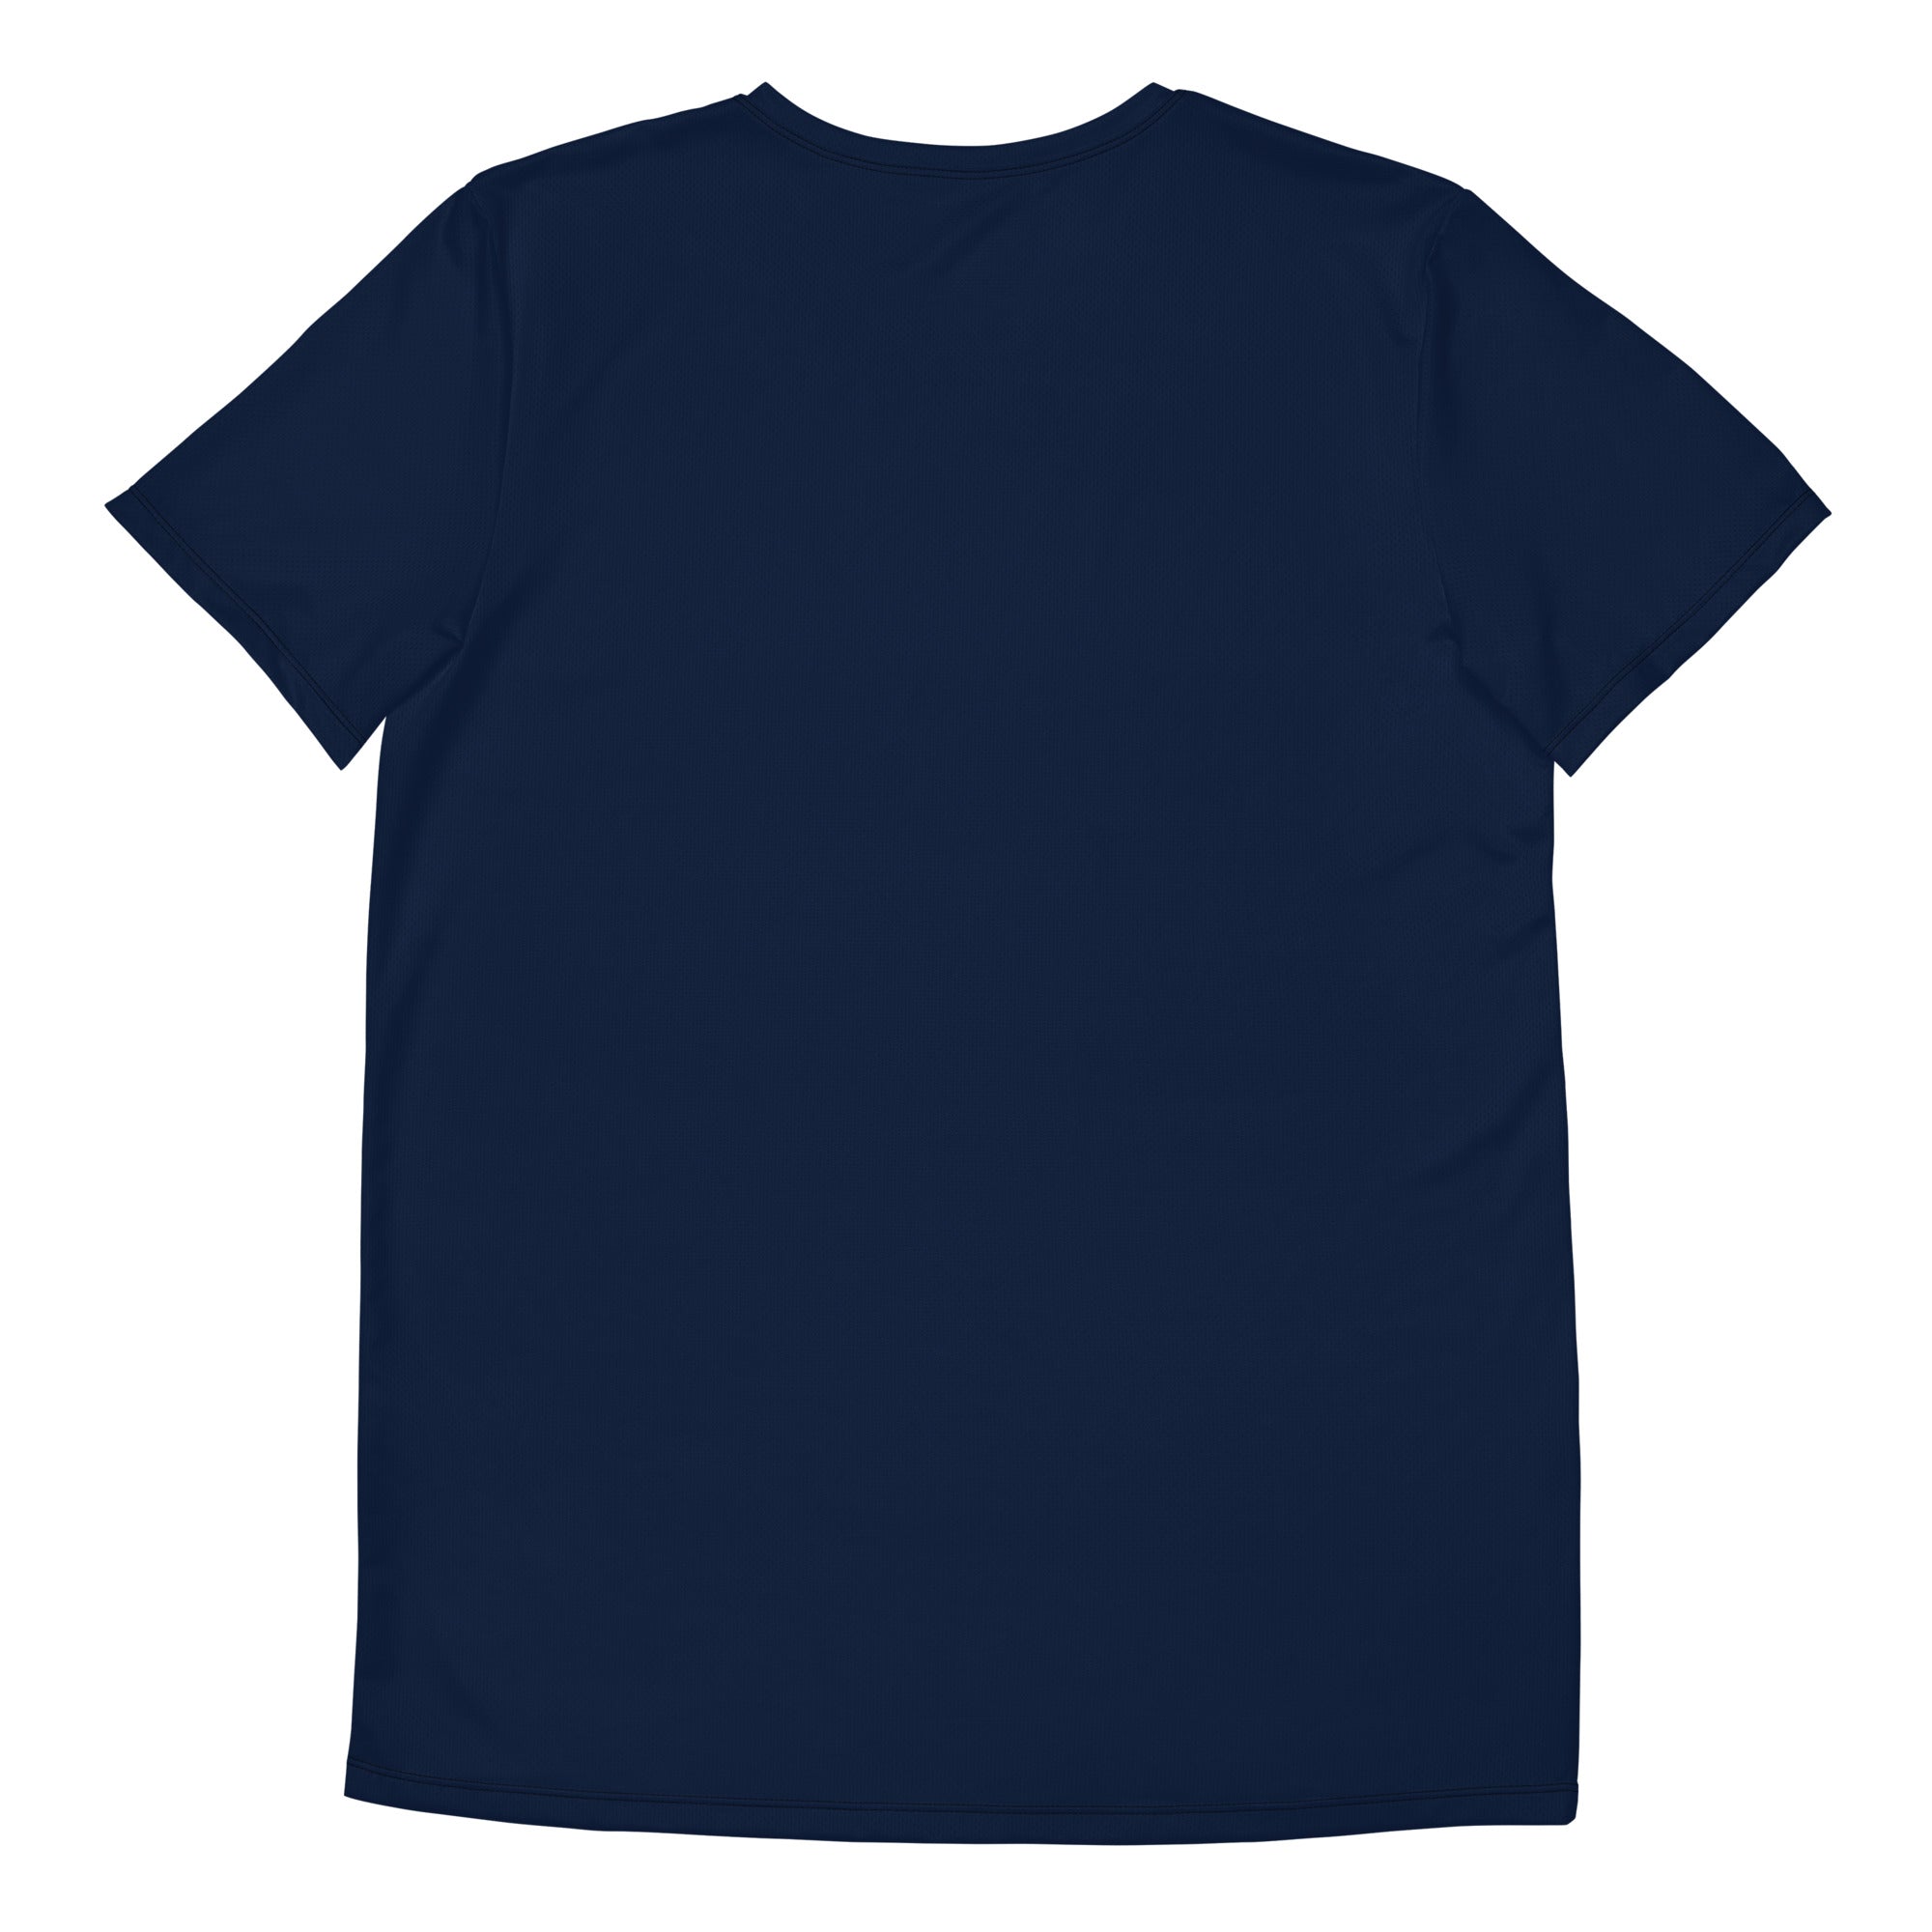 CLCS Performance Short Sleeve Men's Athletic T-shirt